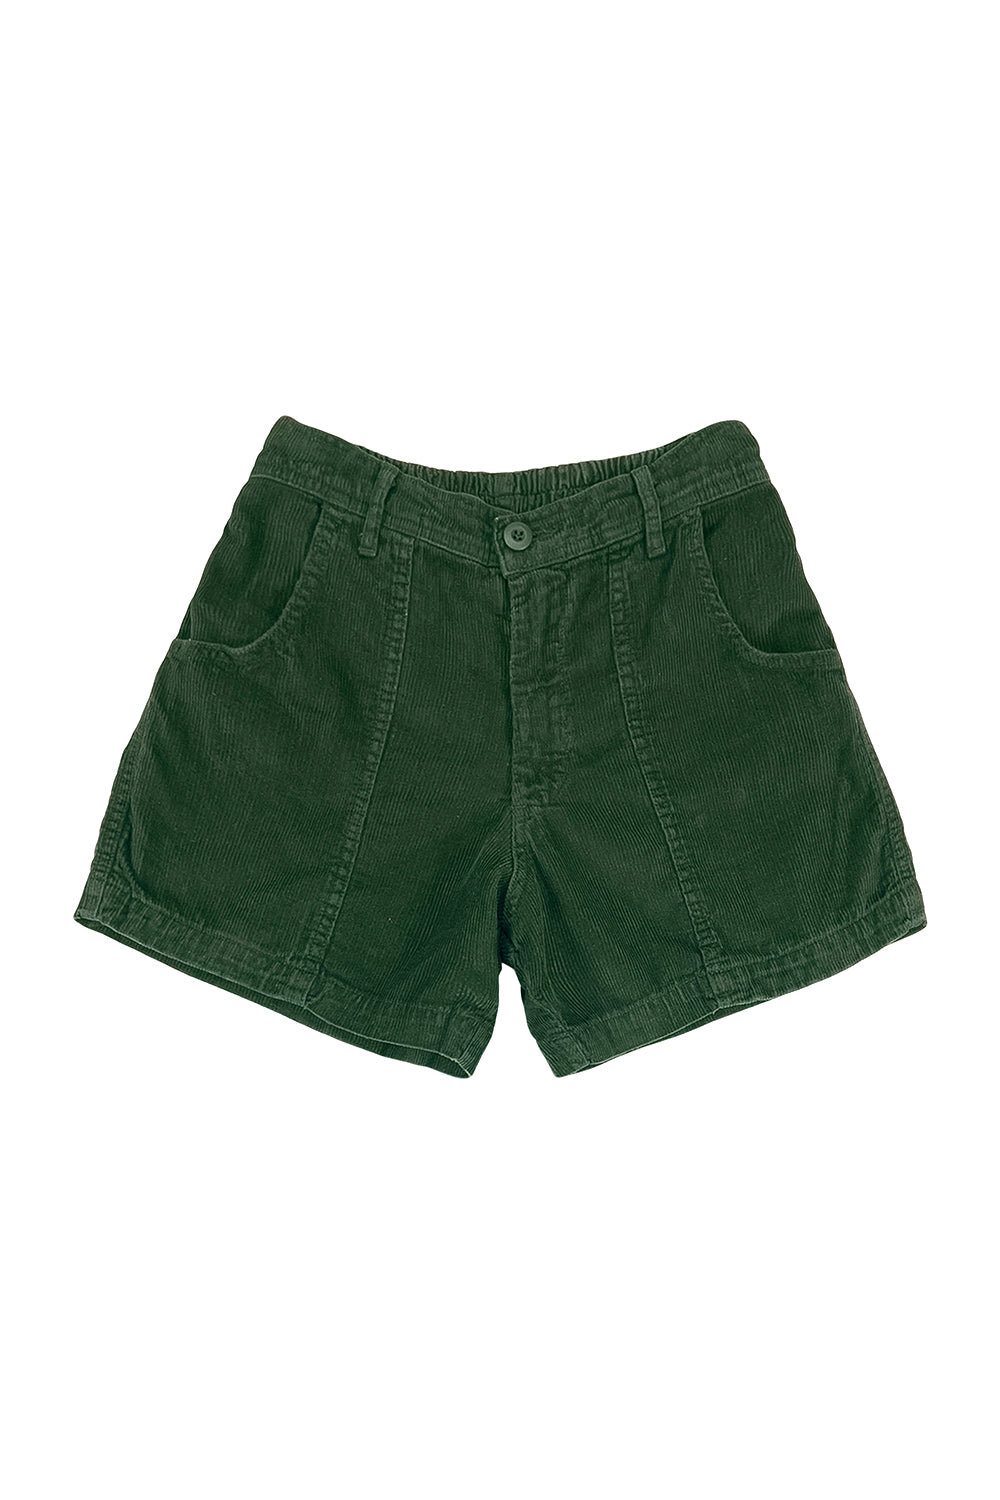 Cabuya Cord Short | Jungmaven Hemp Clothing & Accessories / Color: Hunter Green